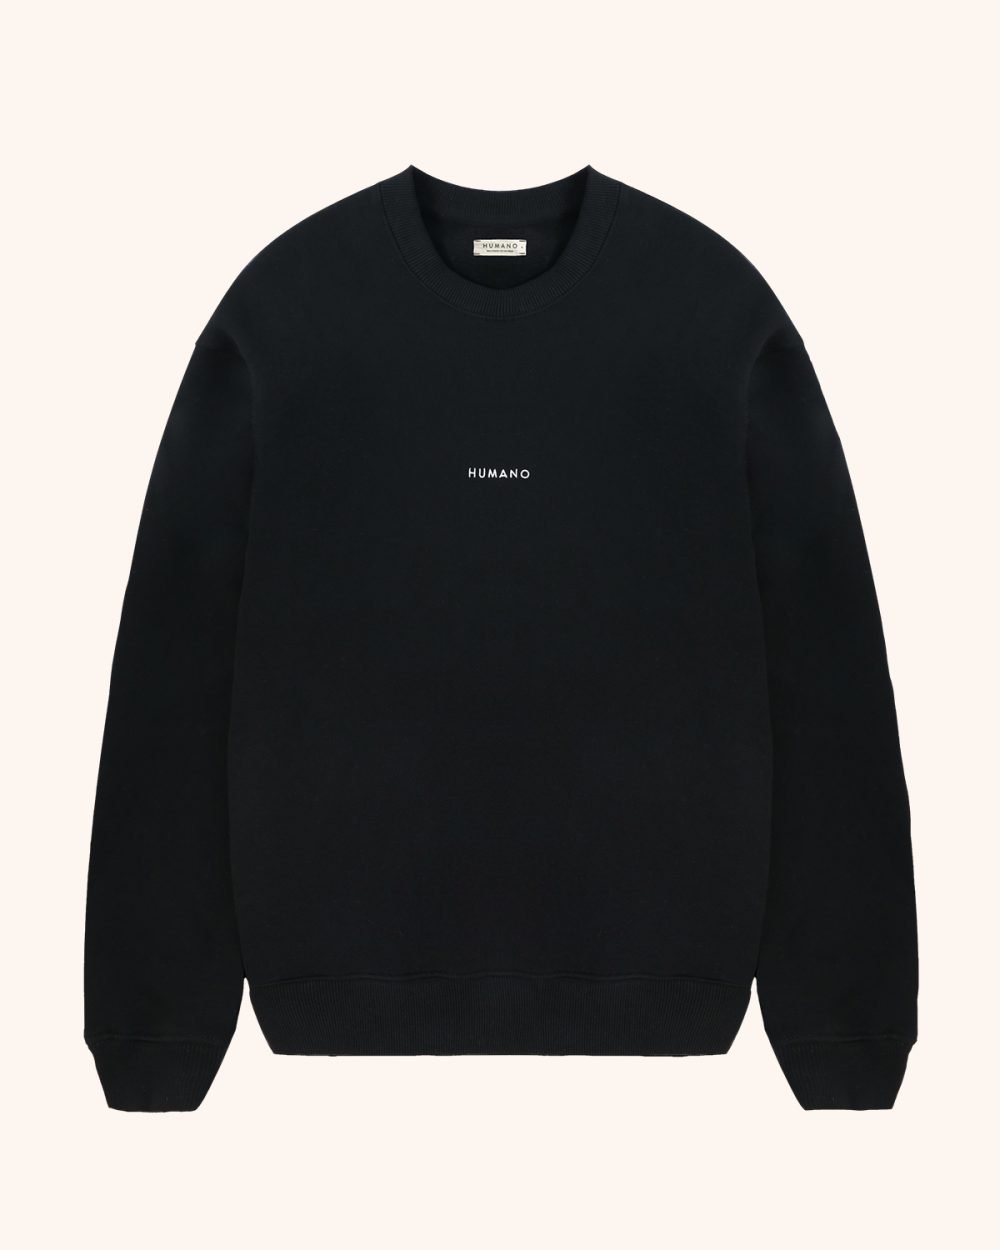 Humano Sweatshirt Black